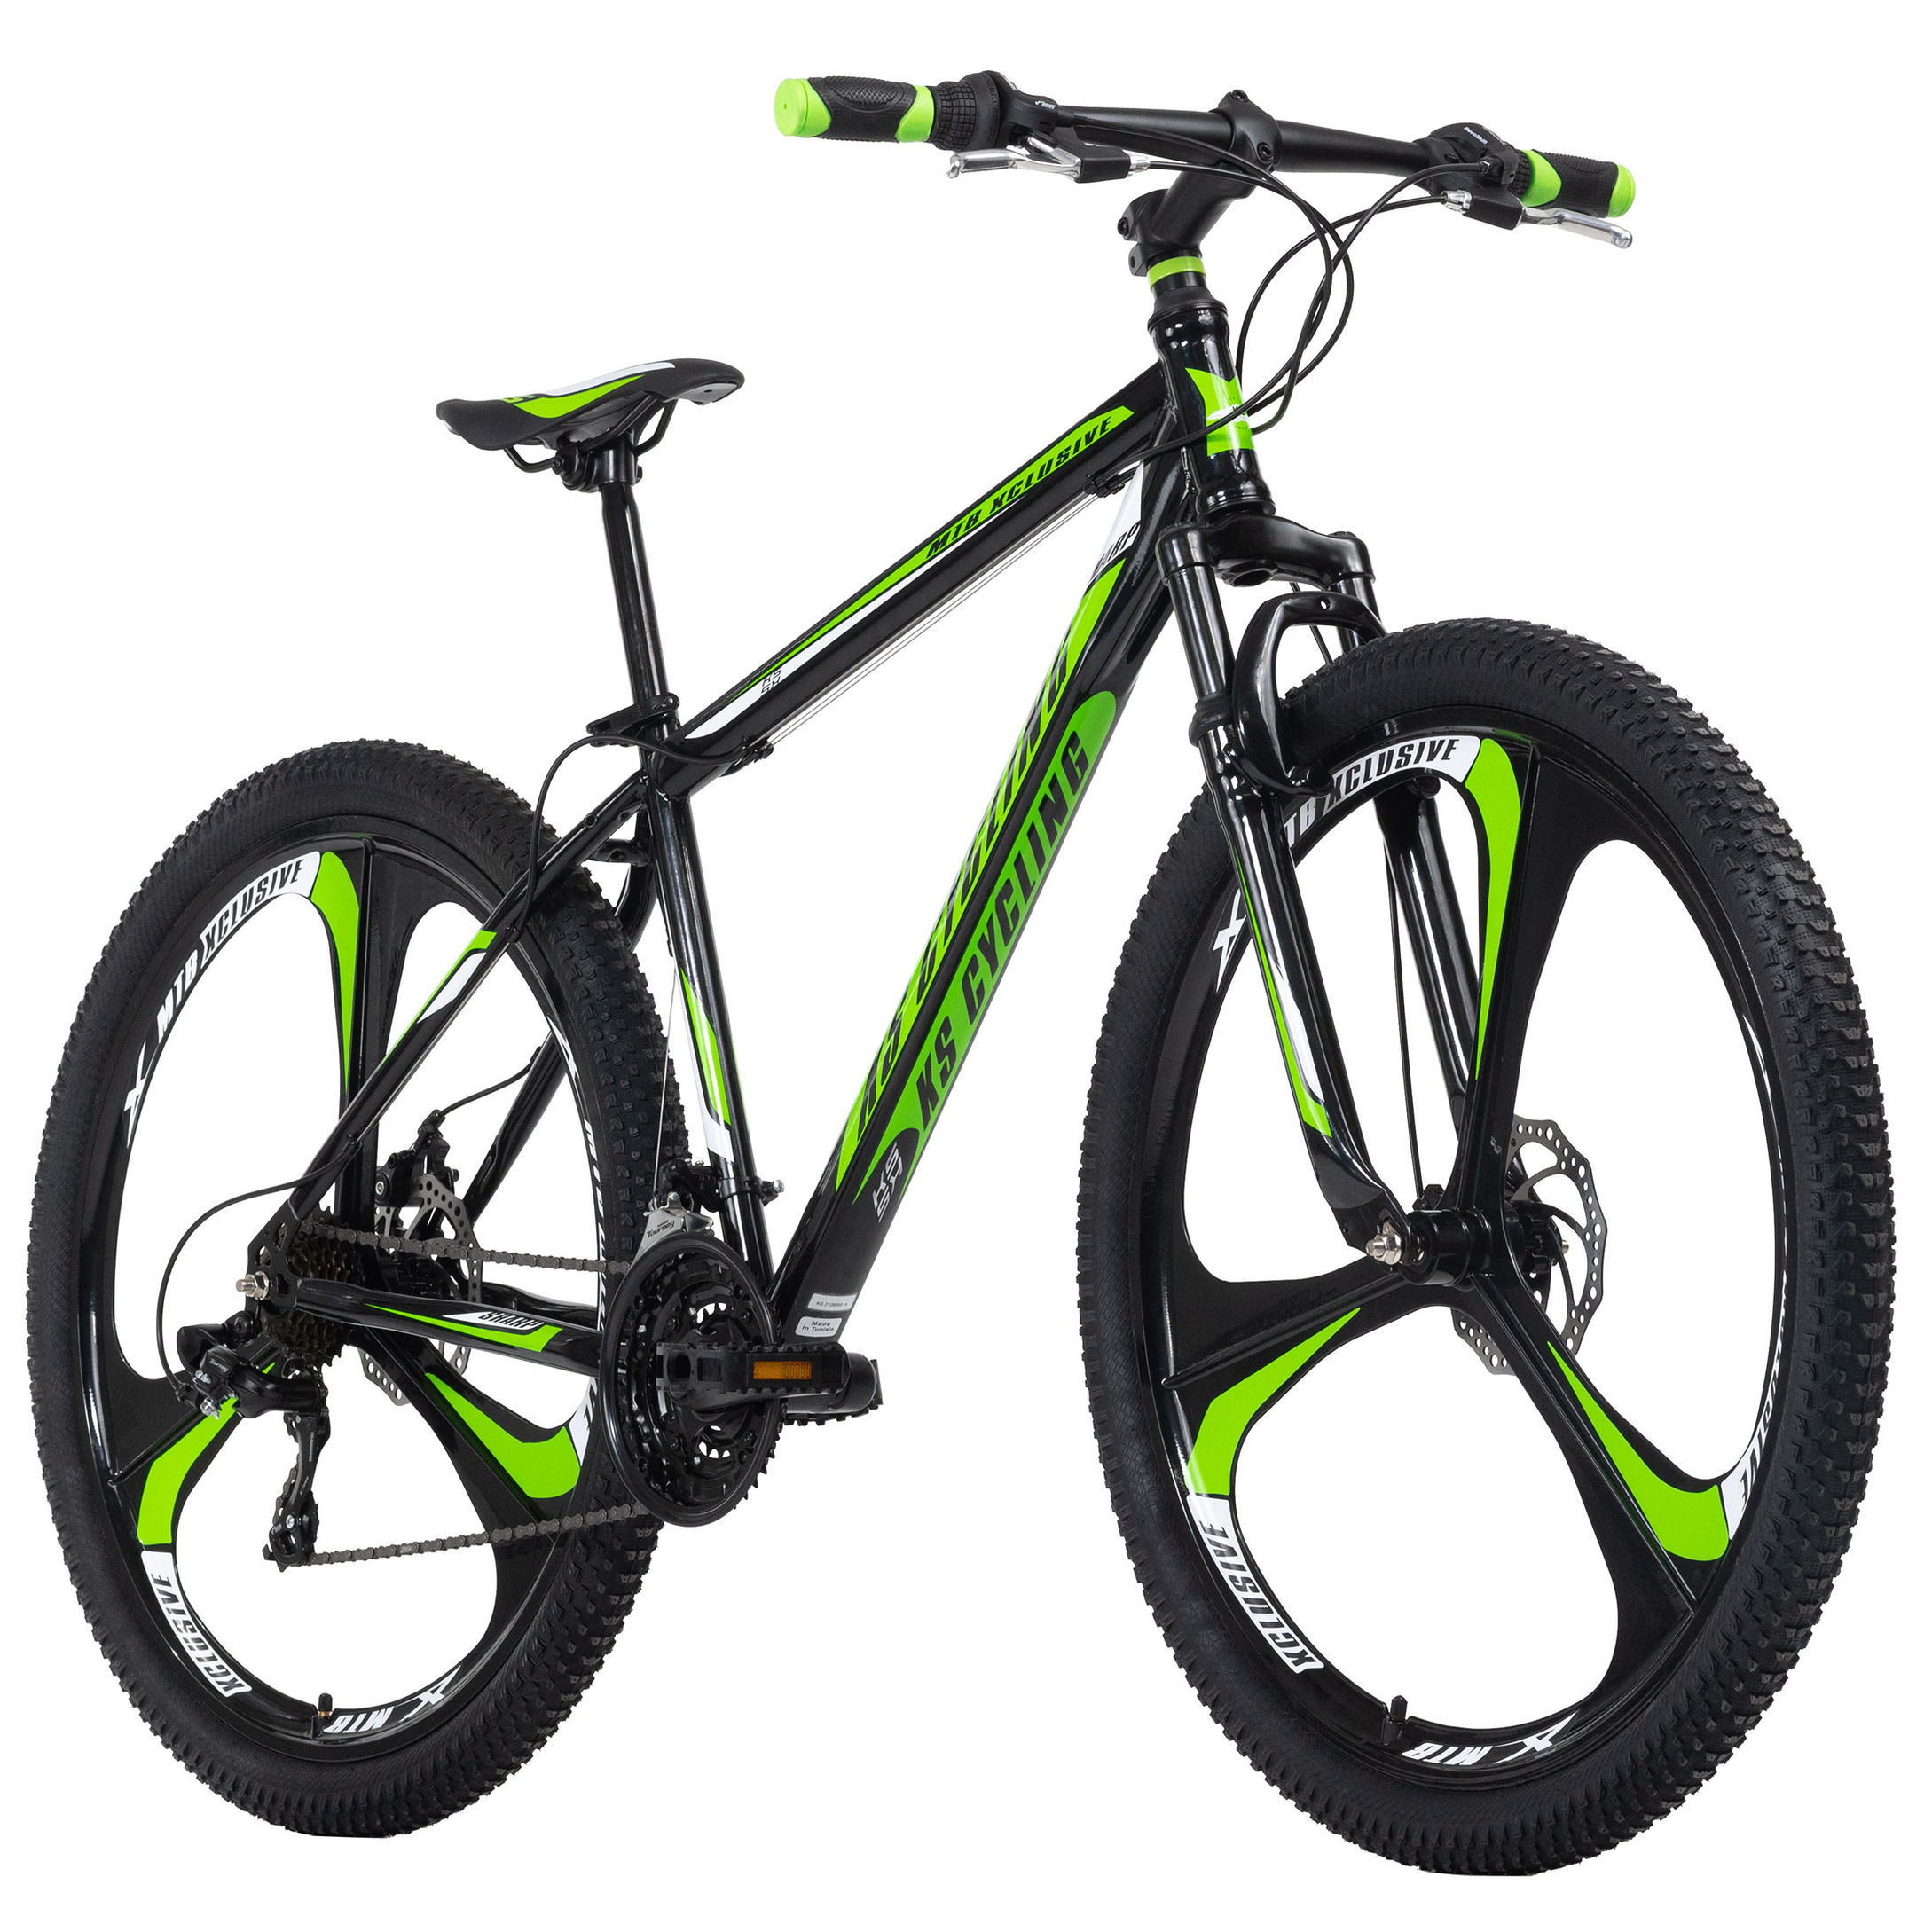 KS Cycling Mountainbike Hardtail 29 Zoll Sharp schwarz-grün Größe: 46 cm |  Weltbild.de